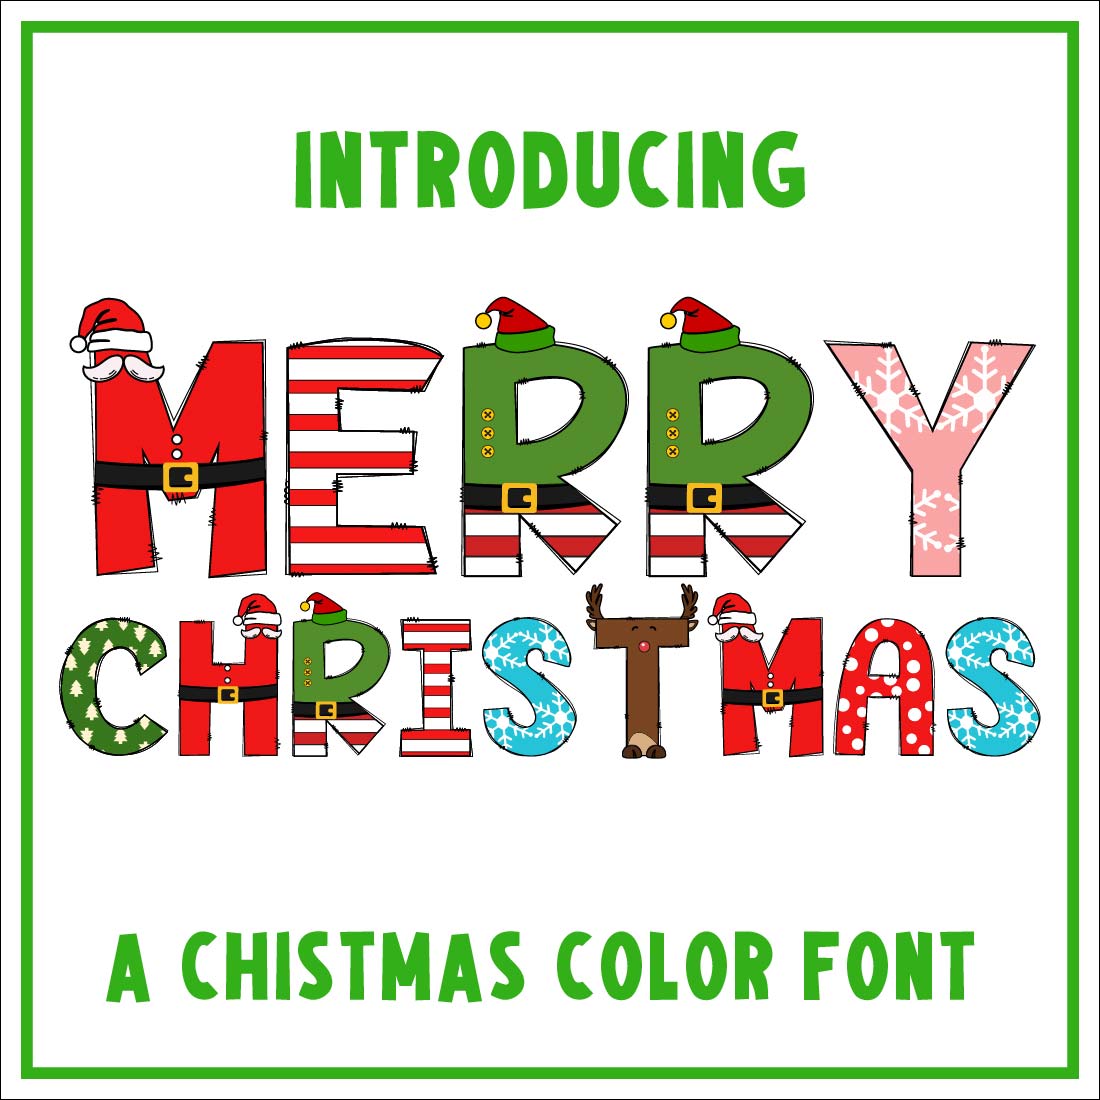 merry christmas text design